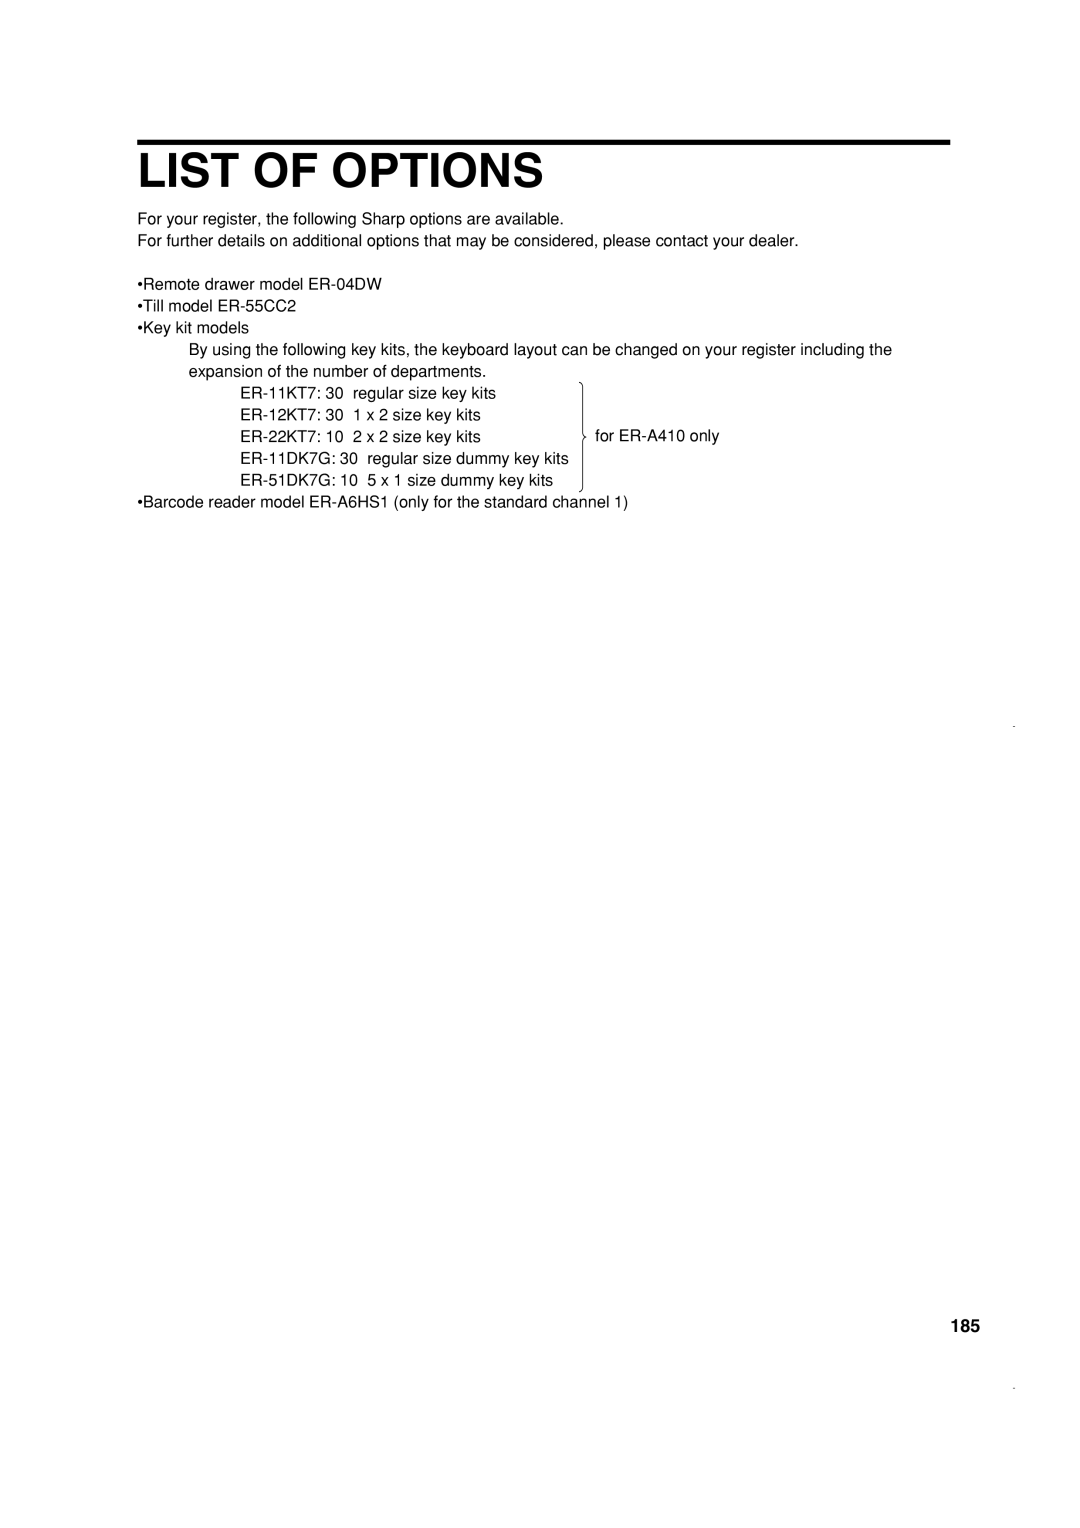 Sony ER-A410, ER-A420 instruction manual List of Options, 185 